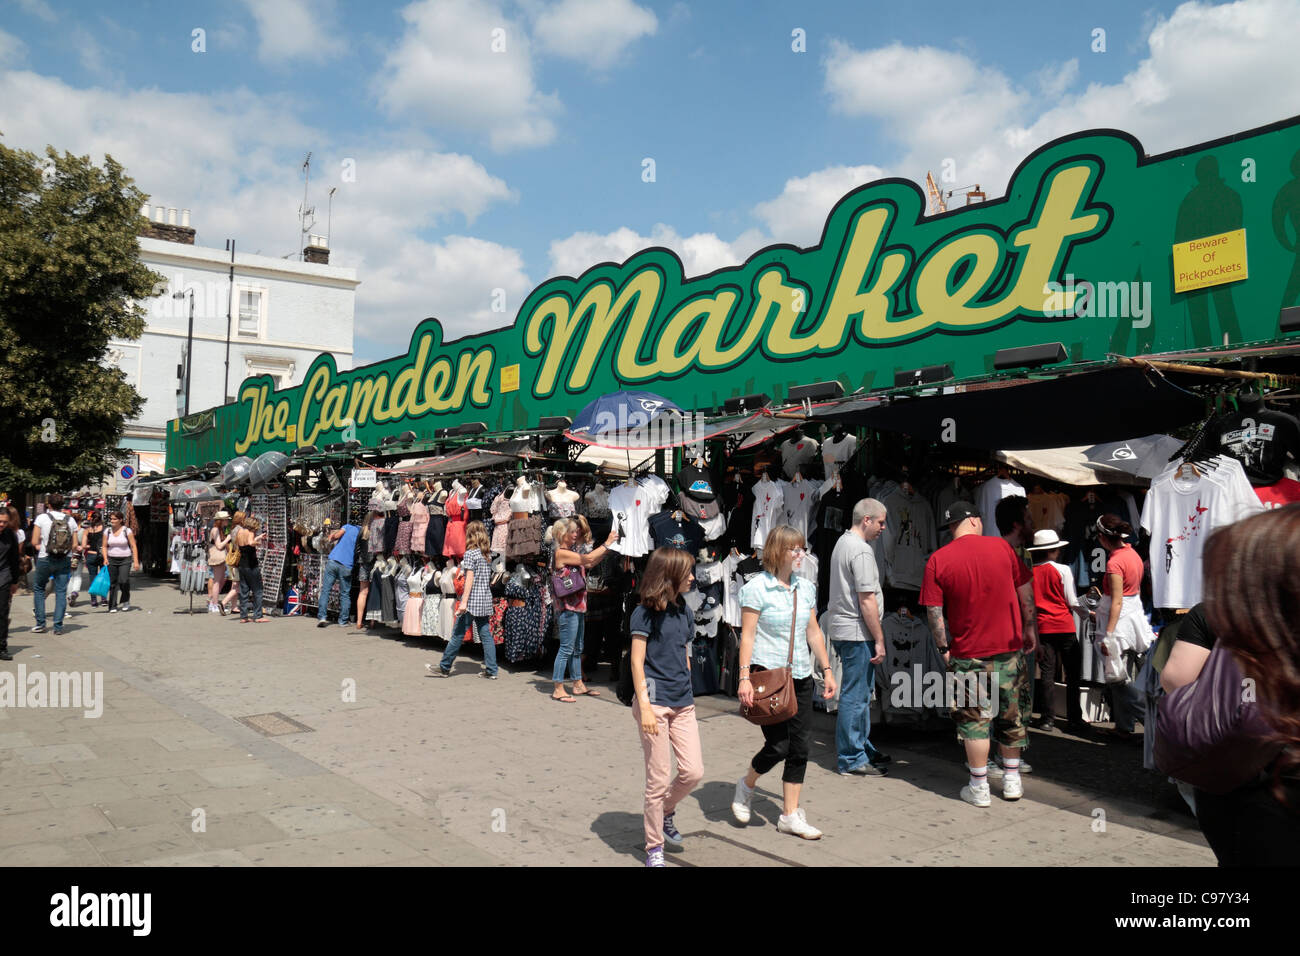 The Camden Market sign, Camden High Road, Camden Town, London, UK Stock Photo